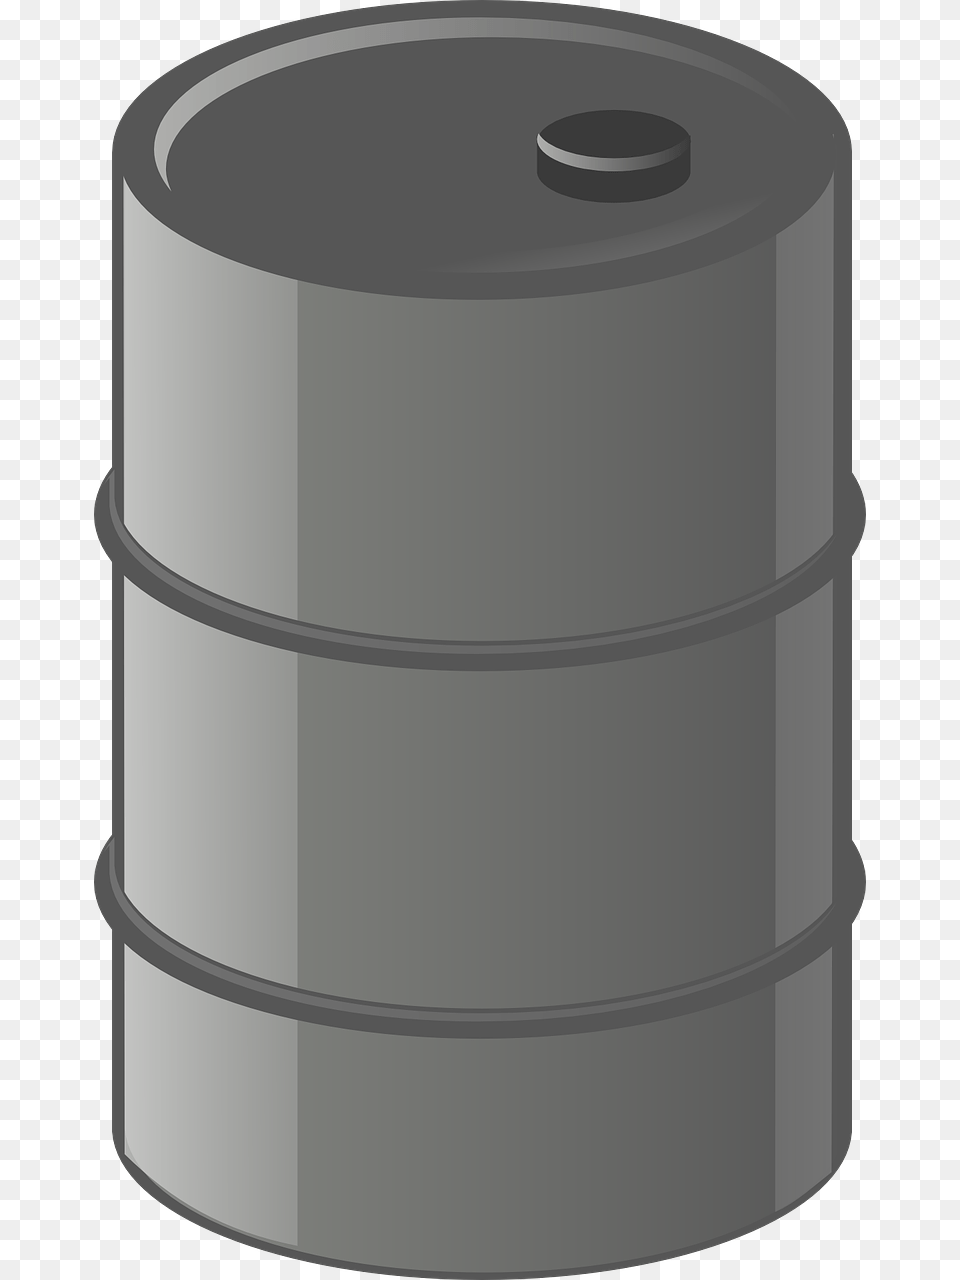 Oil Barrel Clip Art, Keg, Smoke Pipe, Hockey, Ice Hockey Png